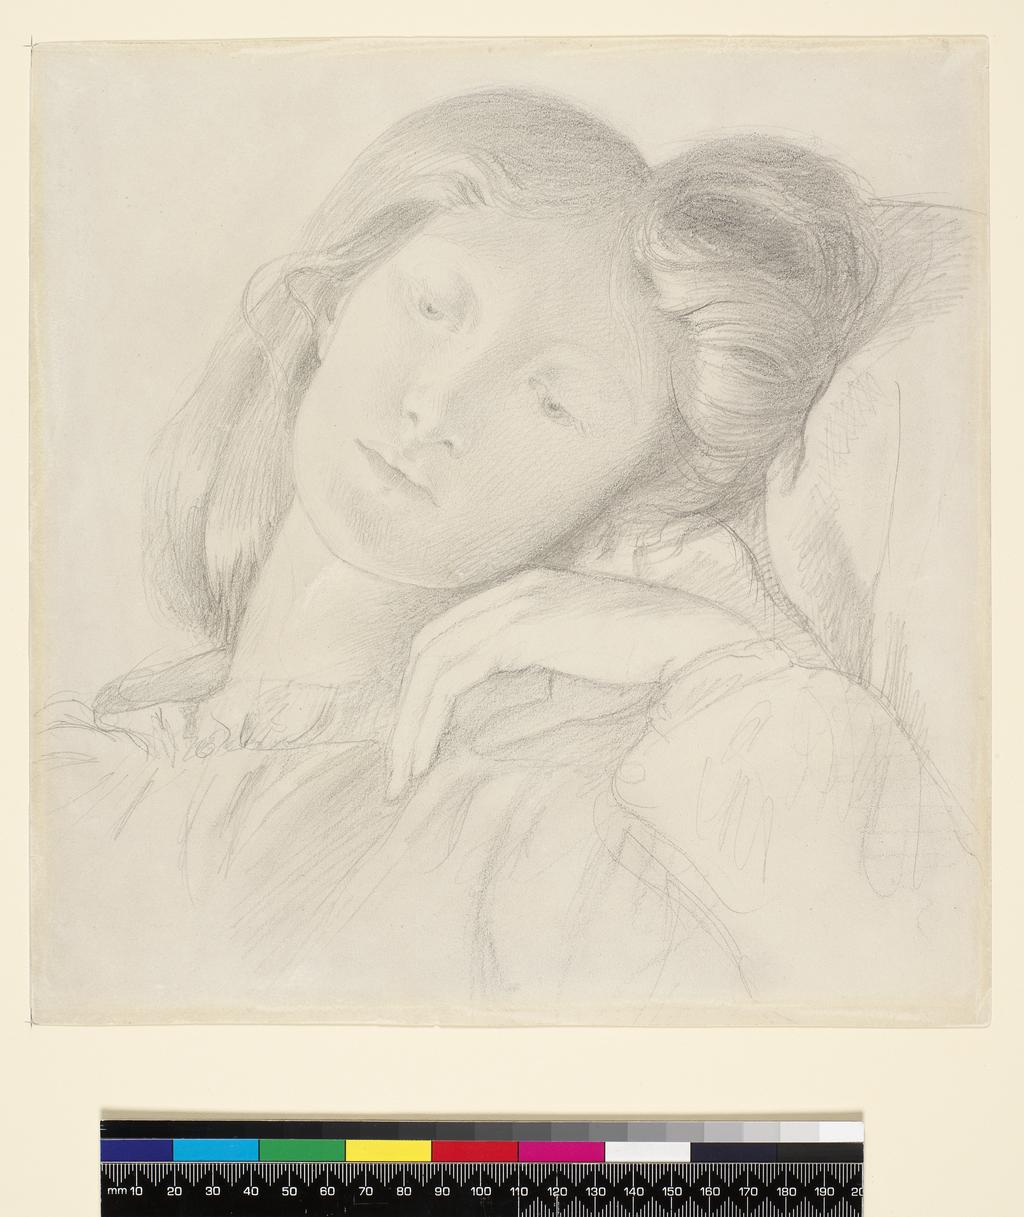 An image of Elizabeth Siddal. Rossetti, Dante Gabriel (British, 1828-1882). Graphite on paper, height 258 mm, width 252 mm, 1860.